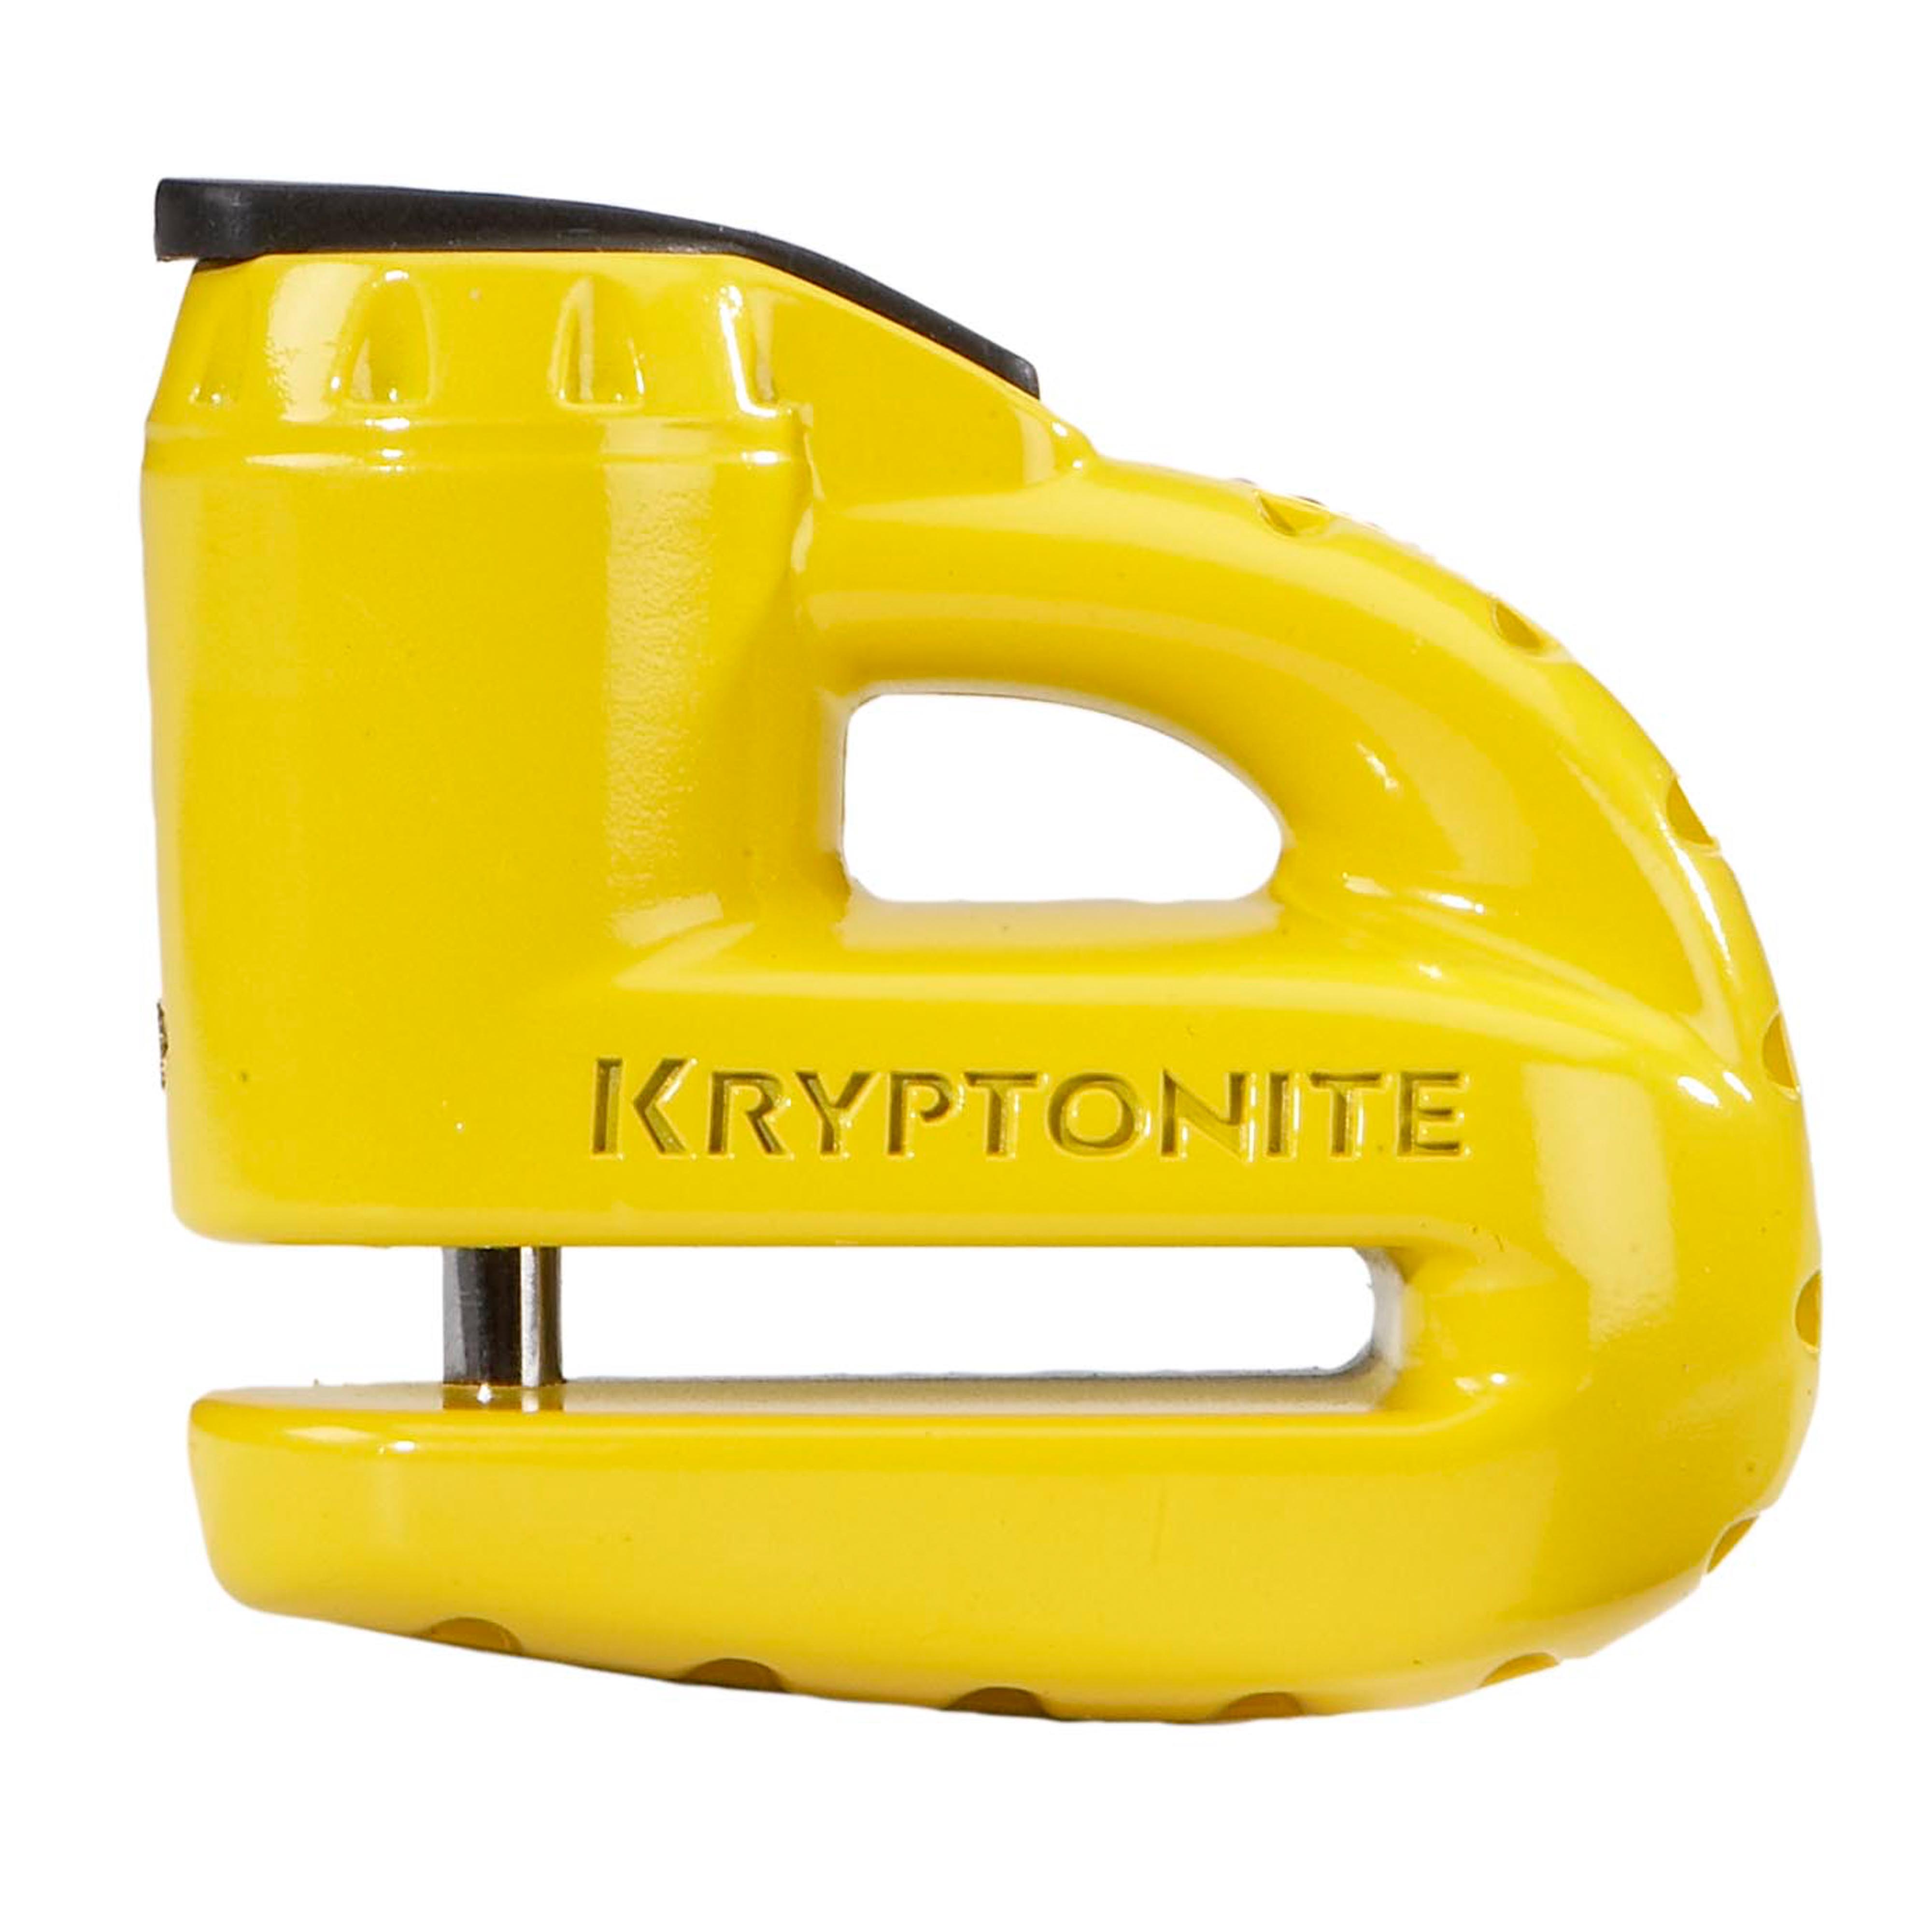 Kryptonite Keeper 5-S2 Disc Lock yellow 000884_KRY -  sports  shop